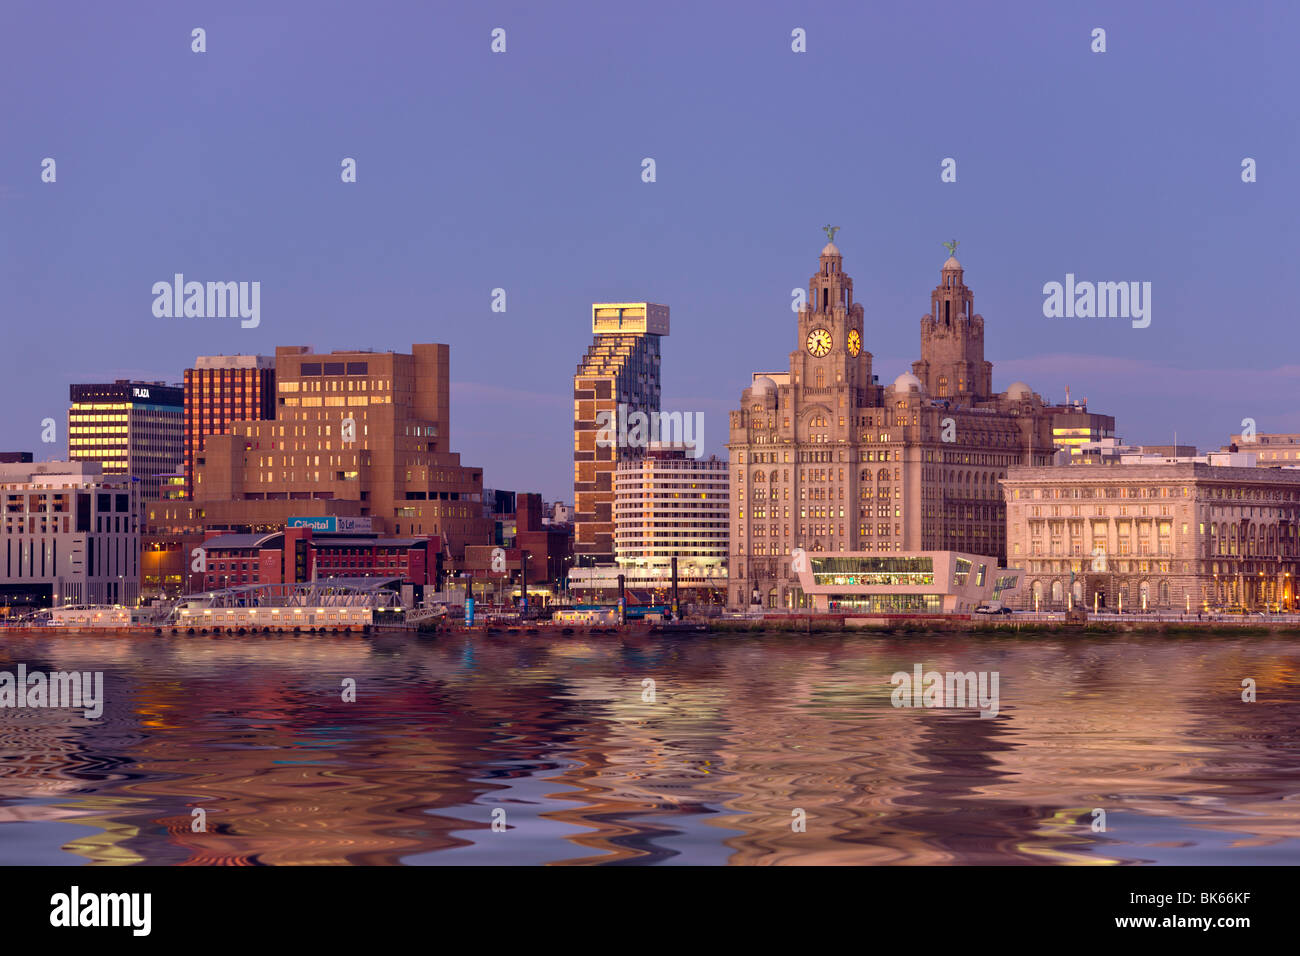 Skyline et front de mer, Liverpool, Merseyside, Angleterre Banque D'Images